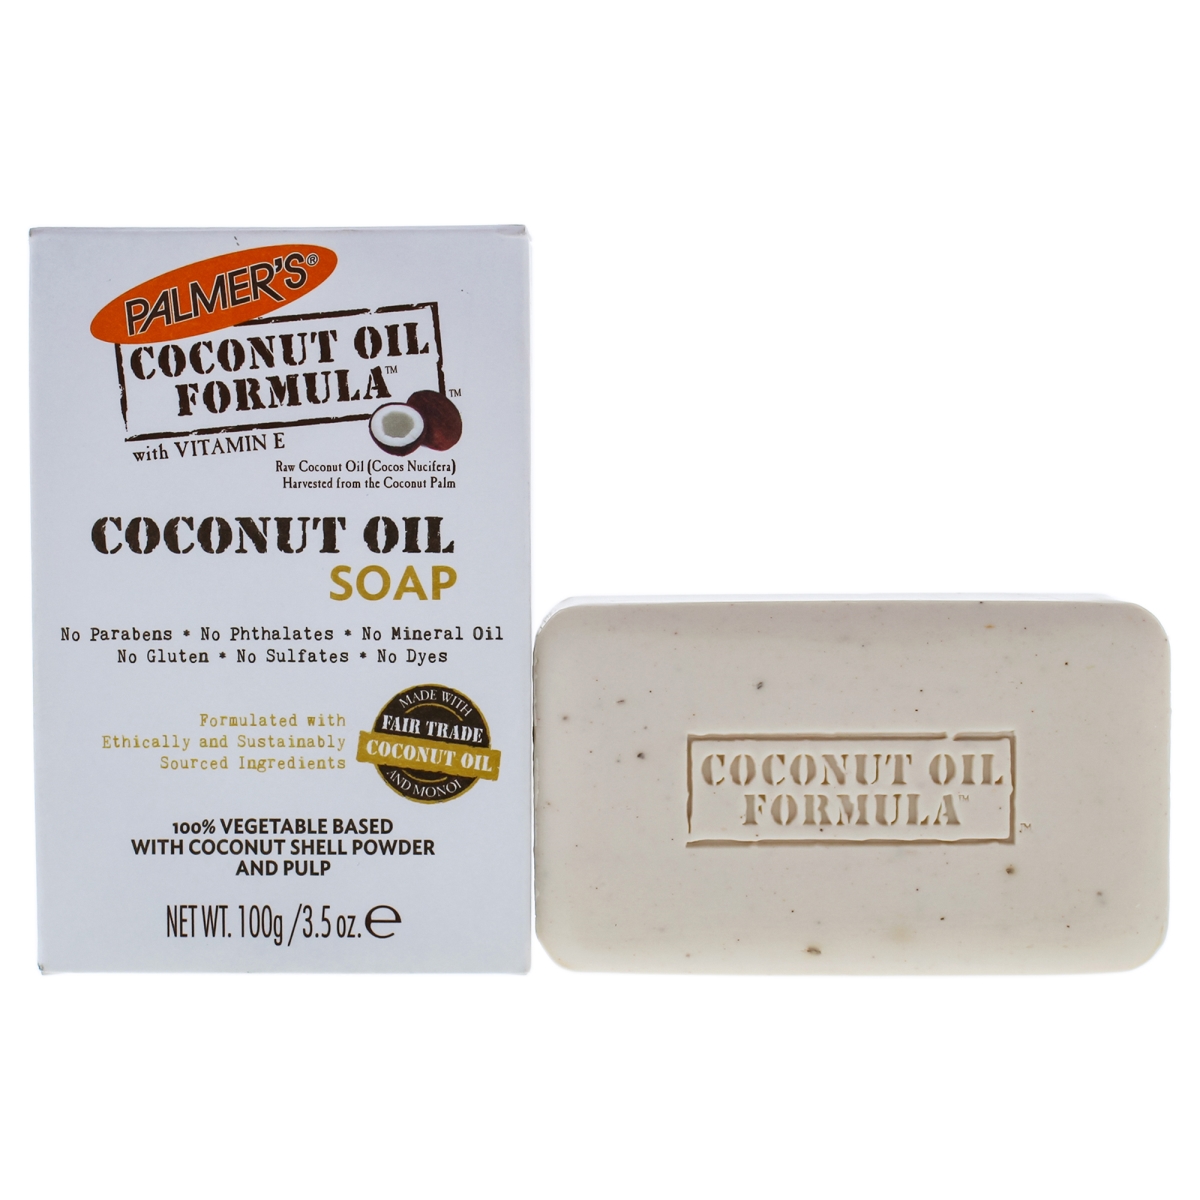 I0088425 Coconut Oil Soap For Unisex - 3.5 Oz